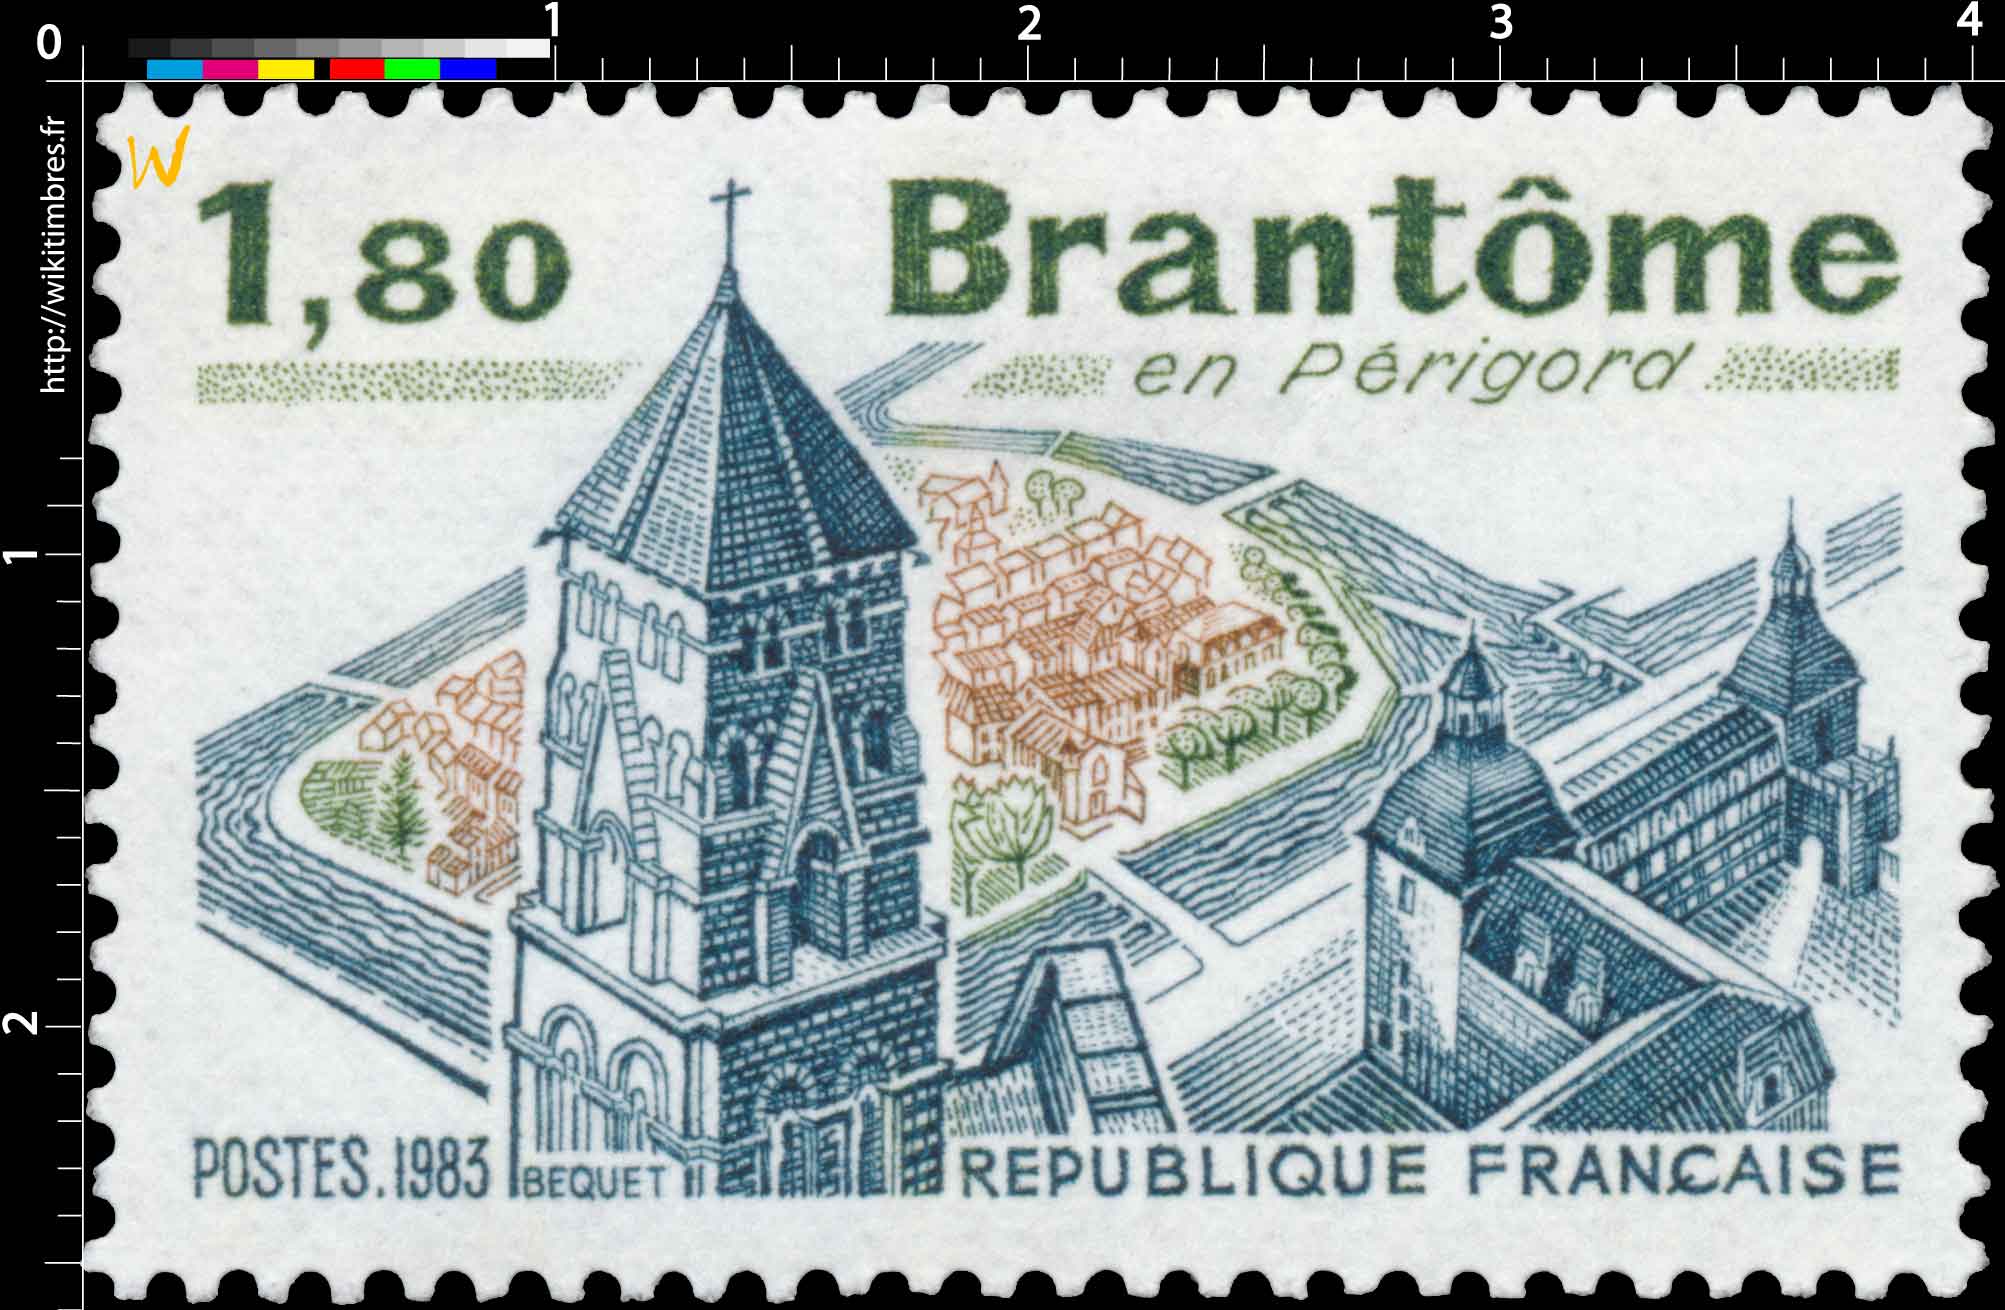 1983 Brantôme en Périgord